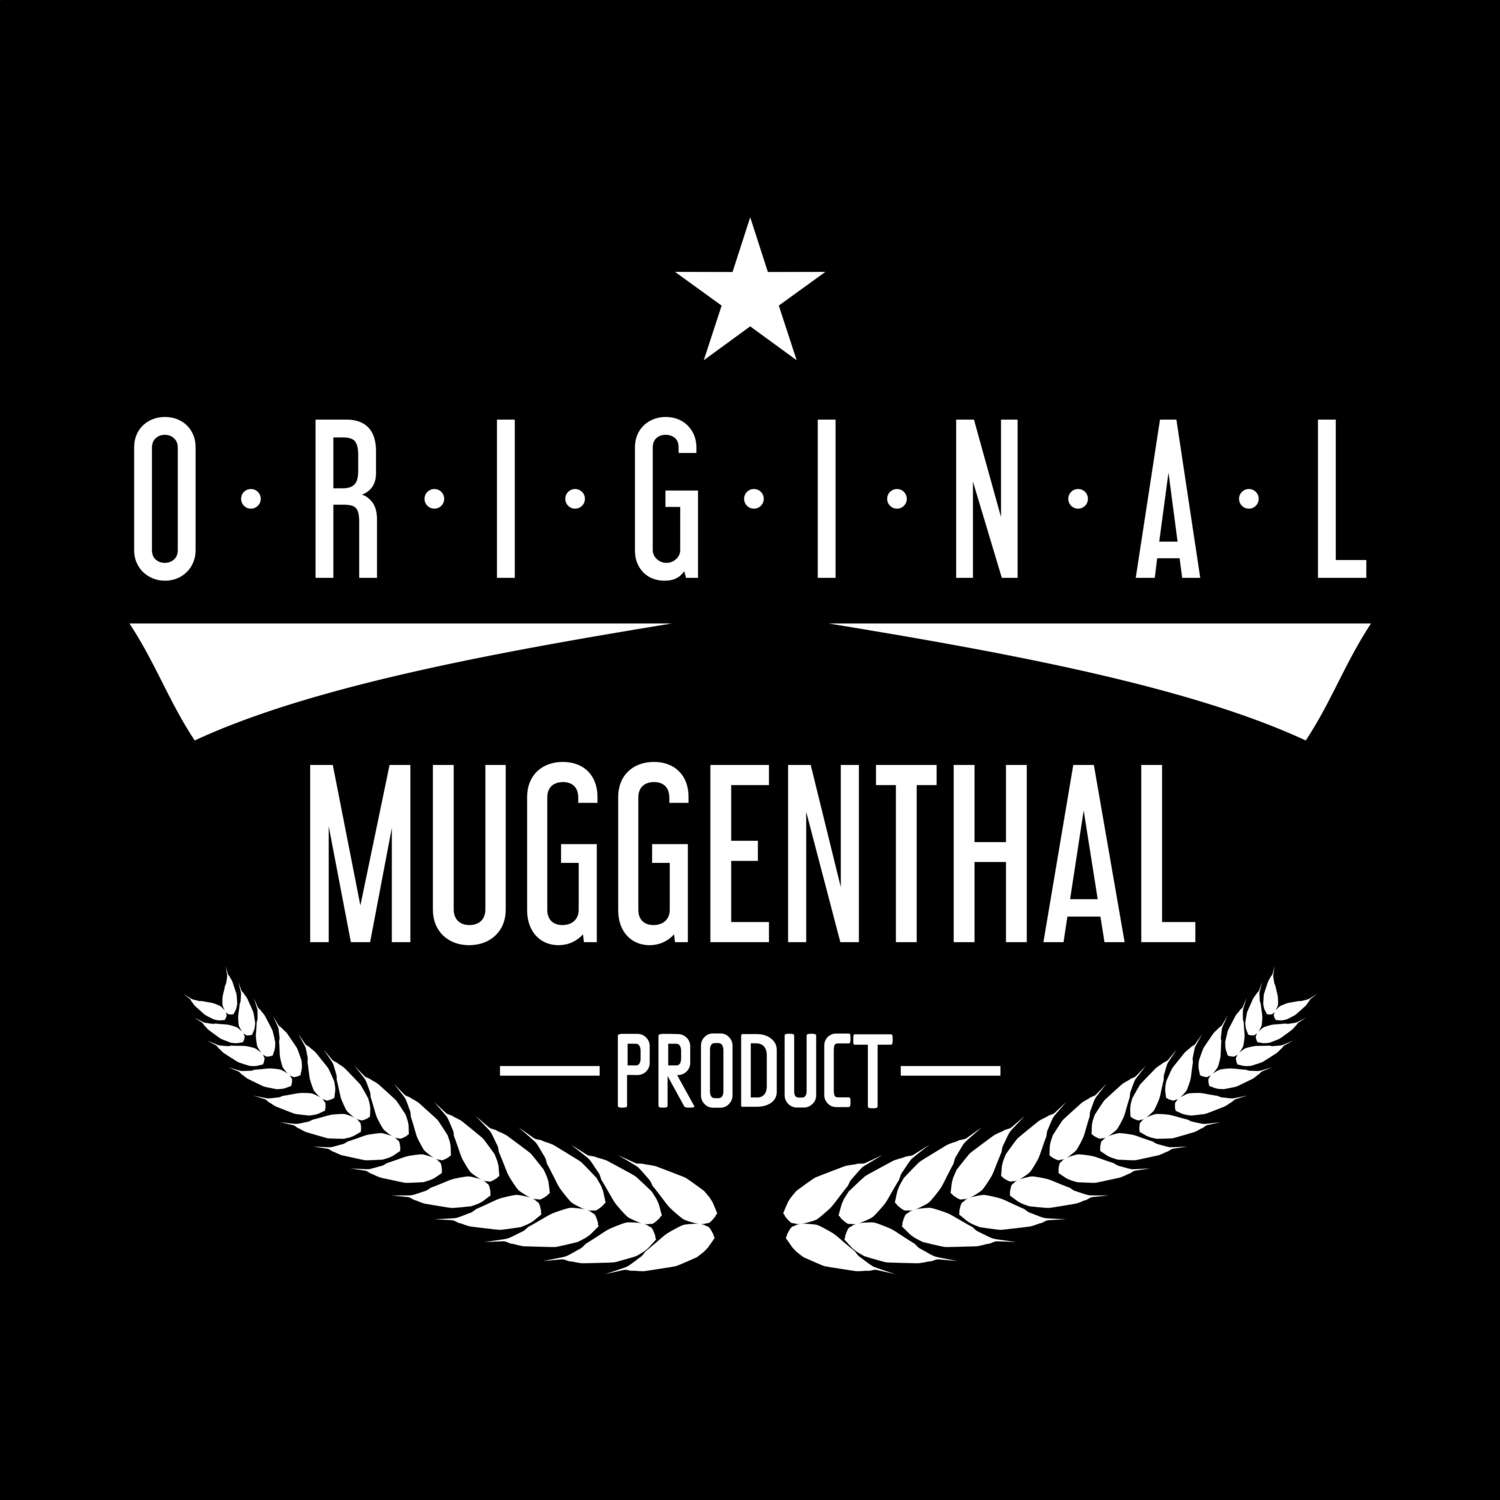 Muggenthal T-Shirt »Original Product«